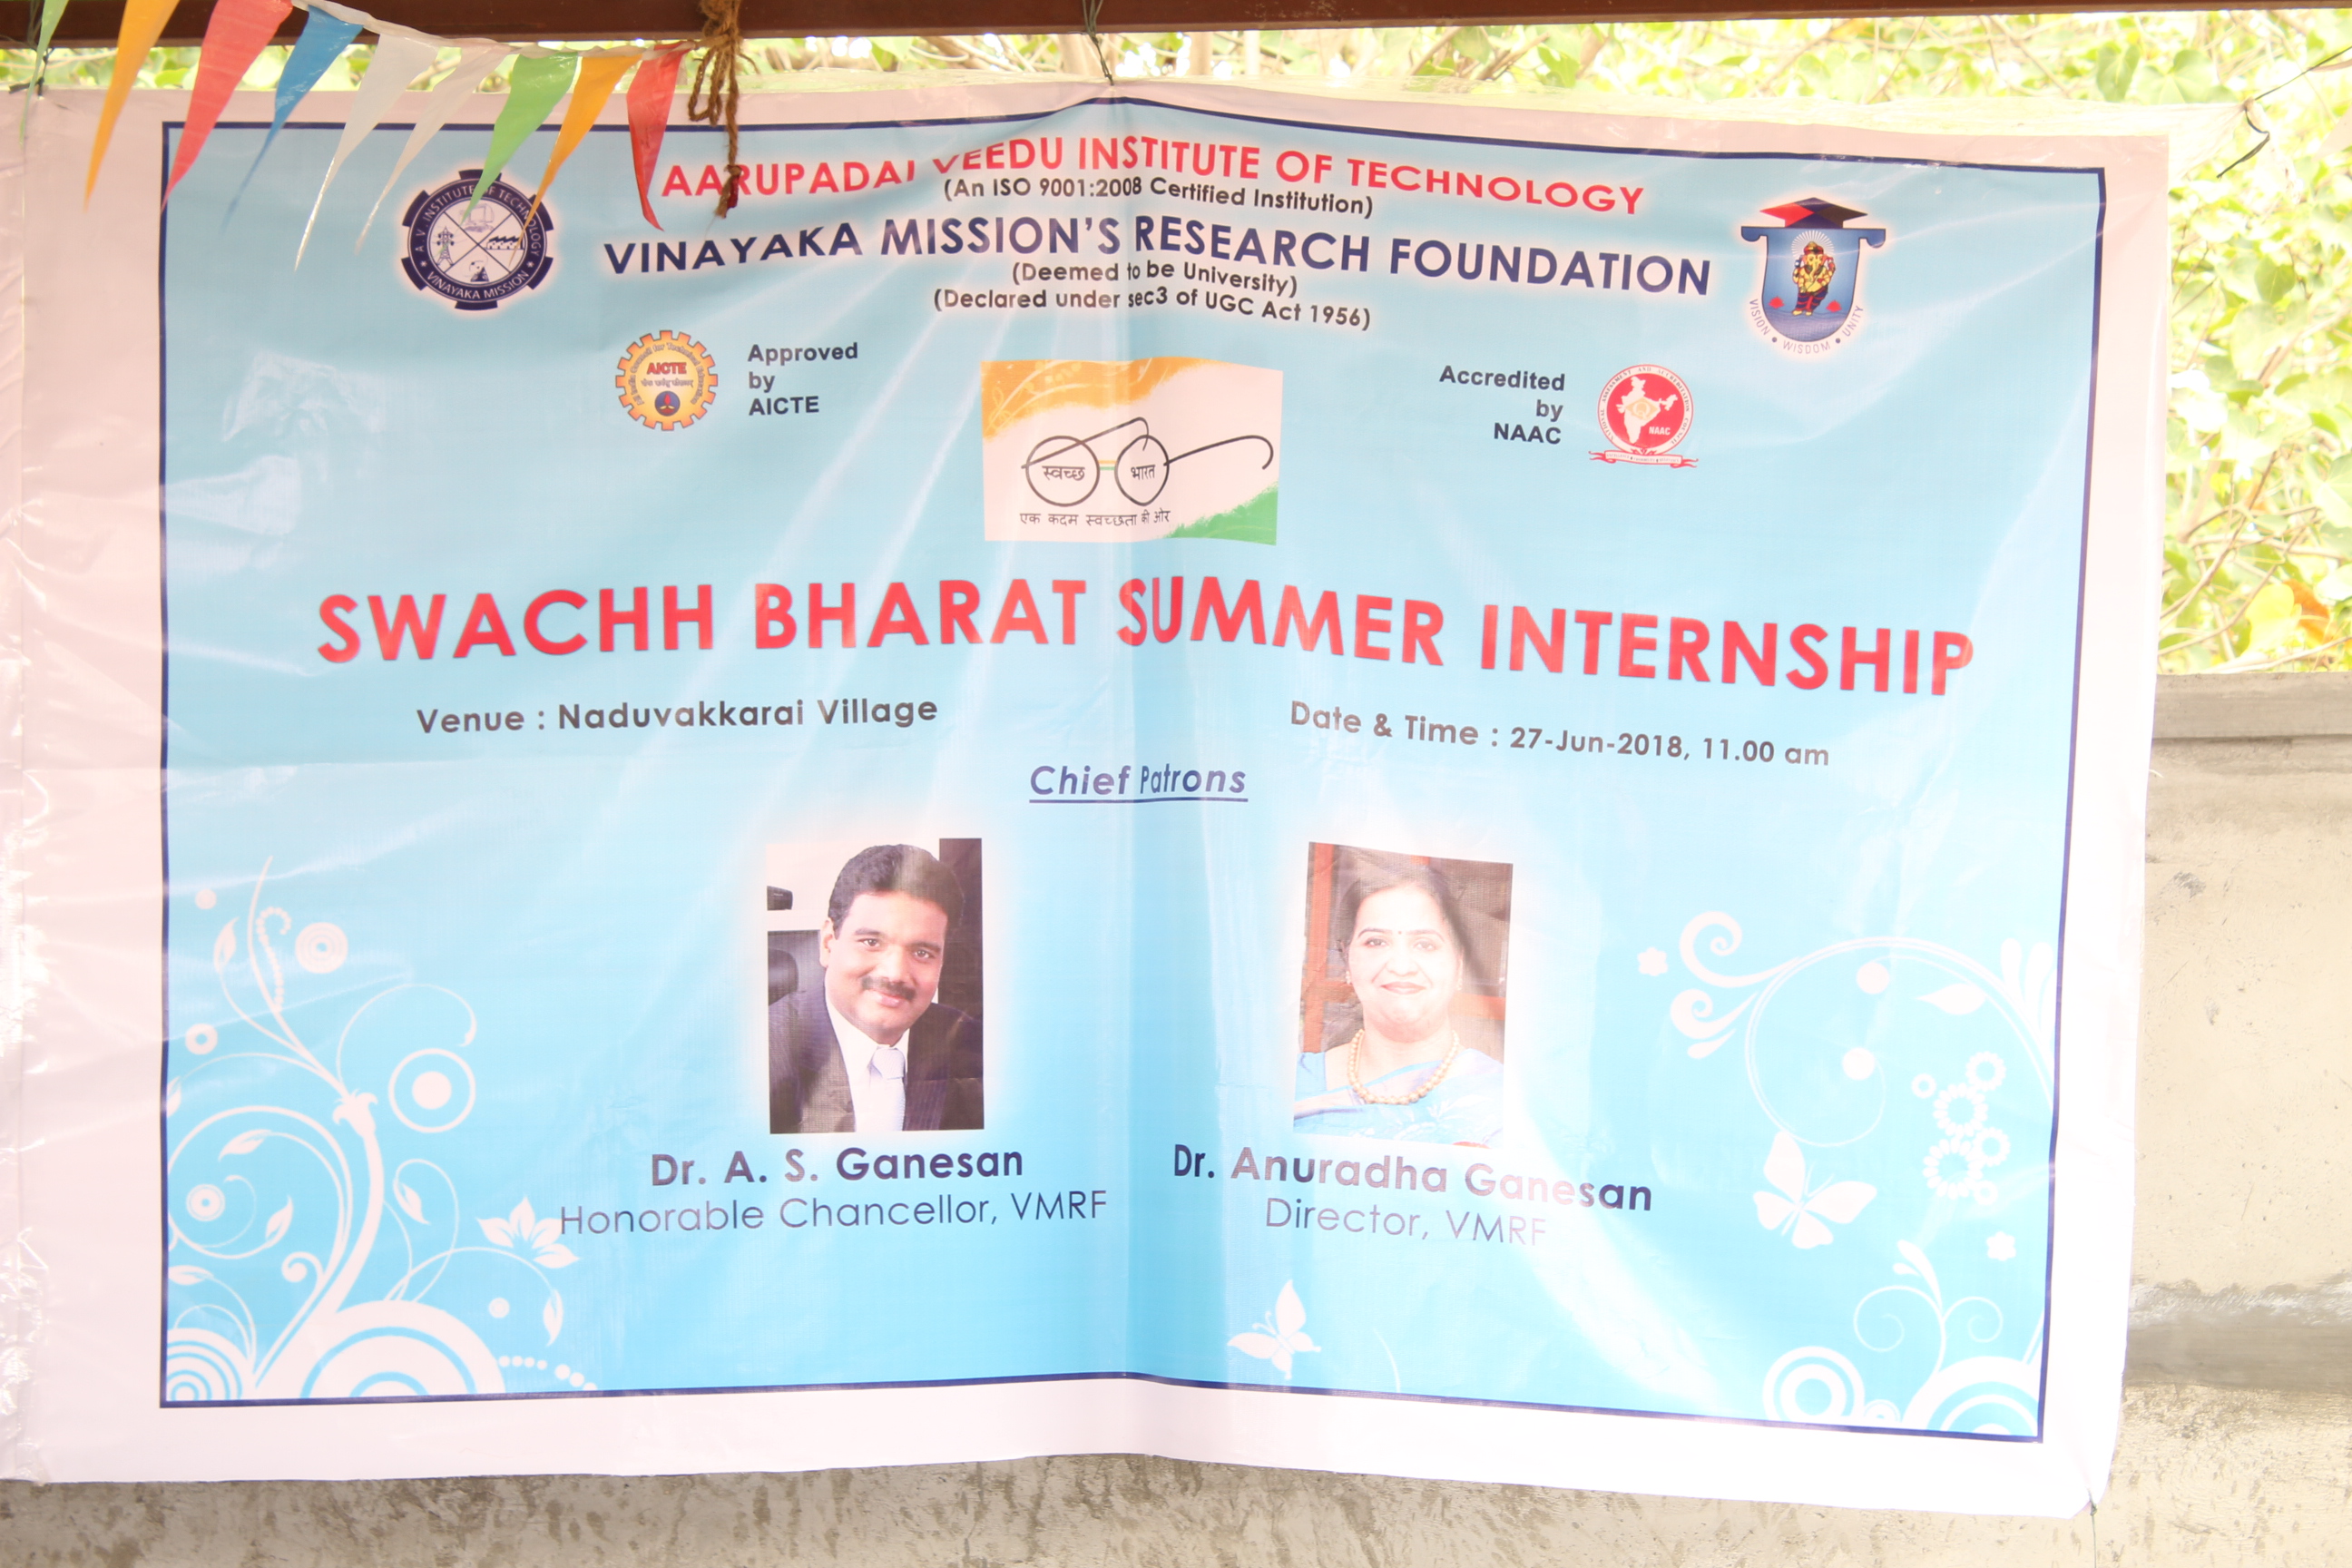 Swachh Bharat Summer Internship by AVIT
